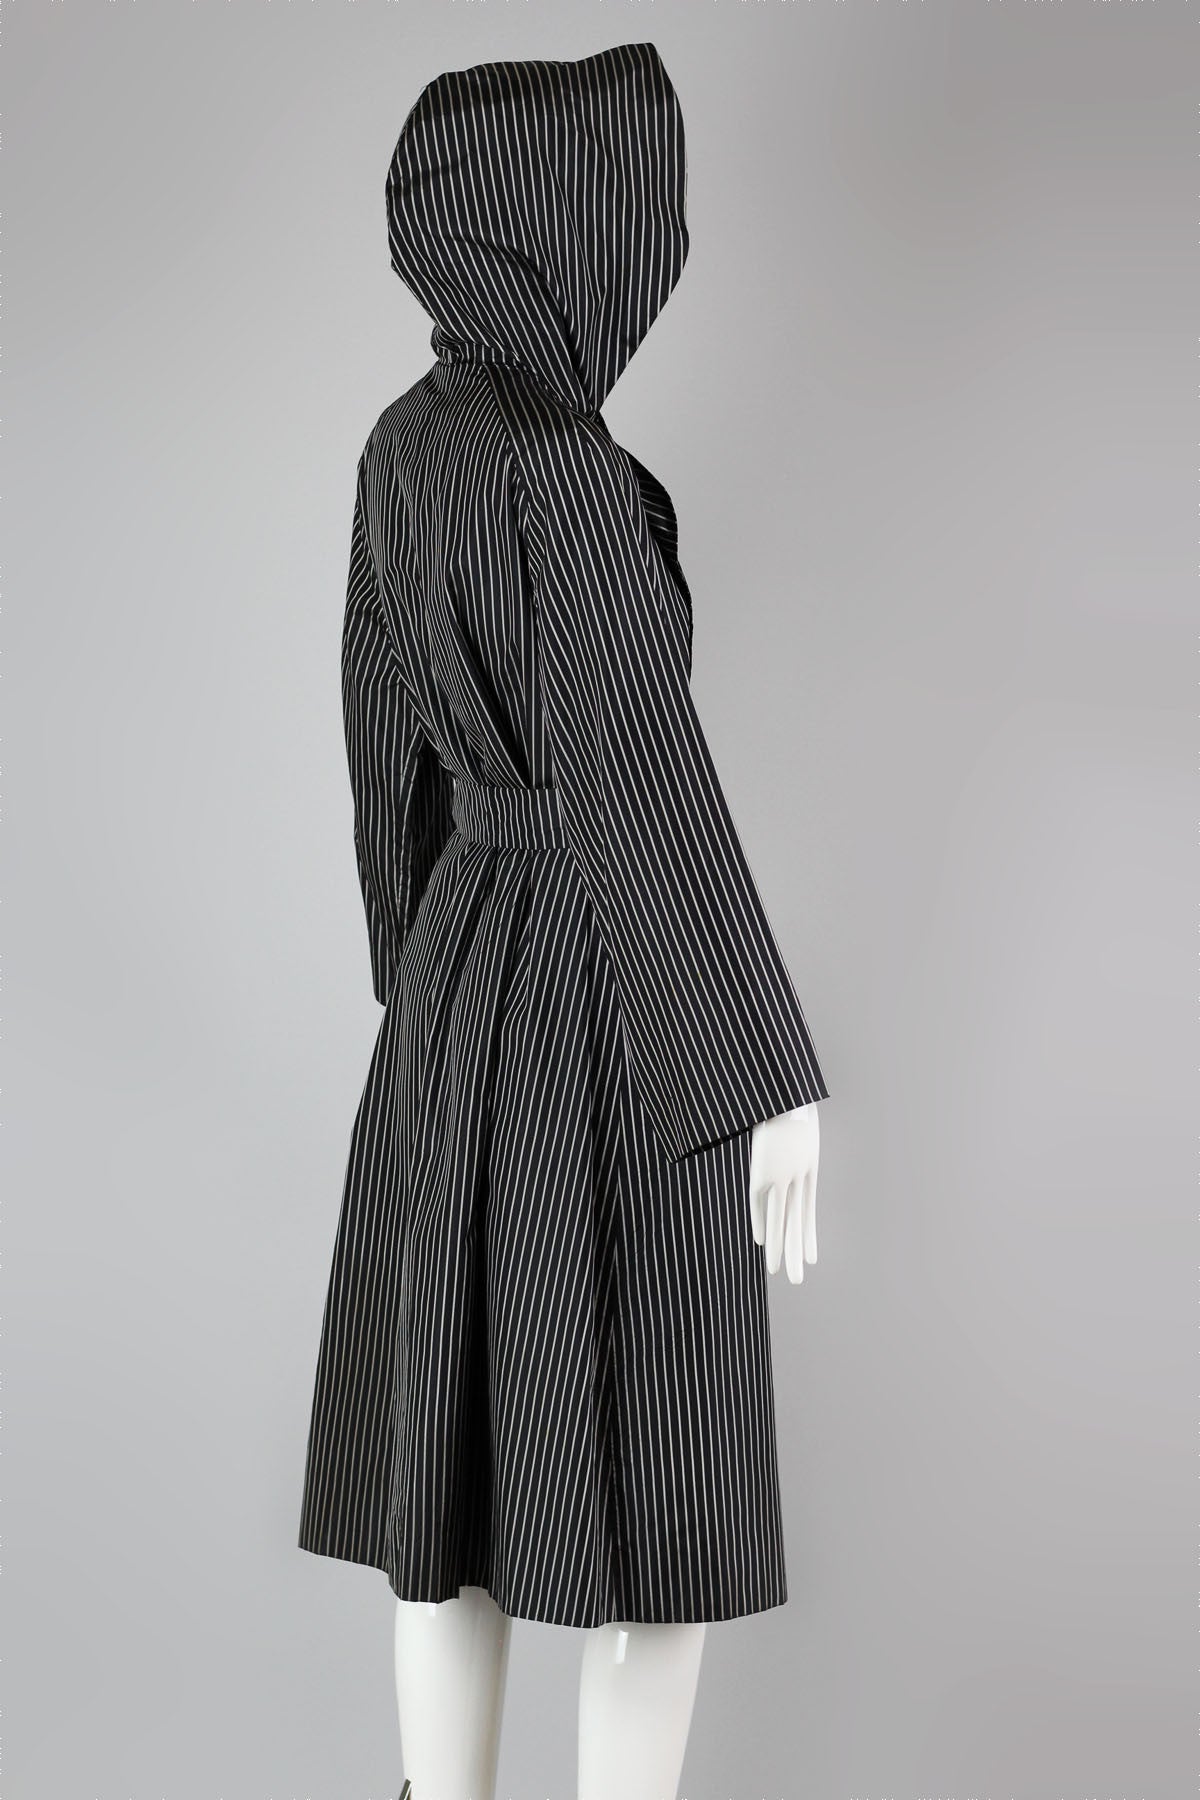 Incredible Vintage Pin-Stripe All Silk Trench Rain Coat